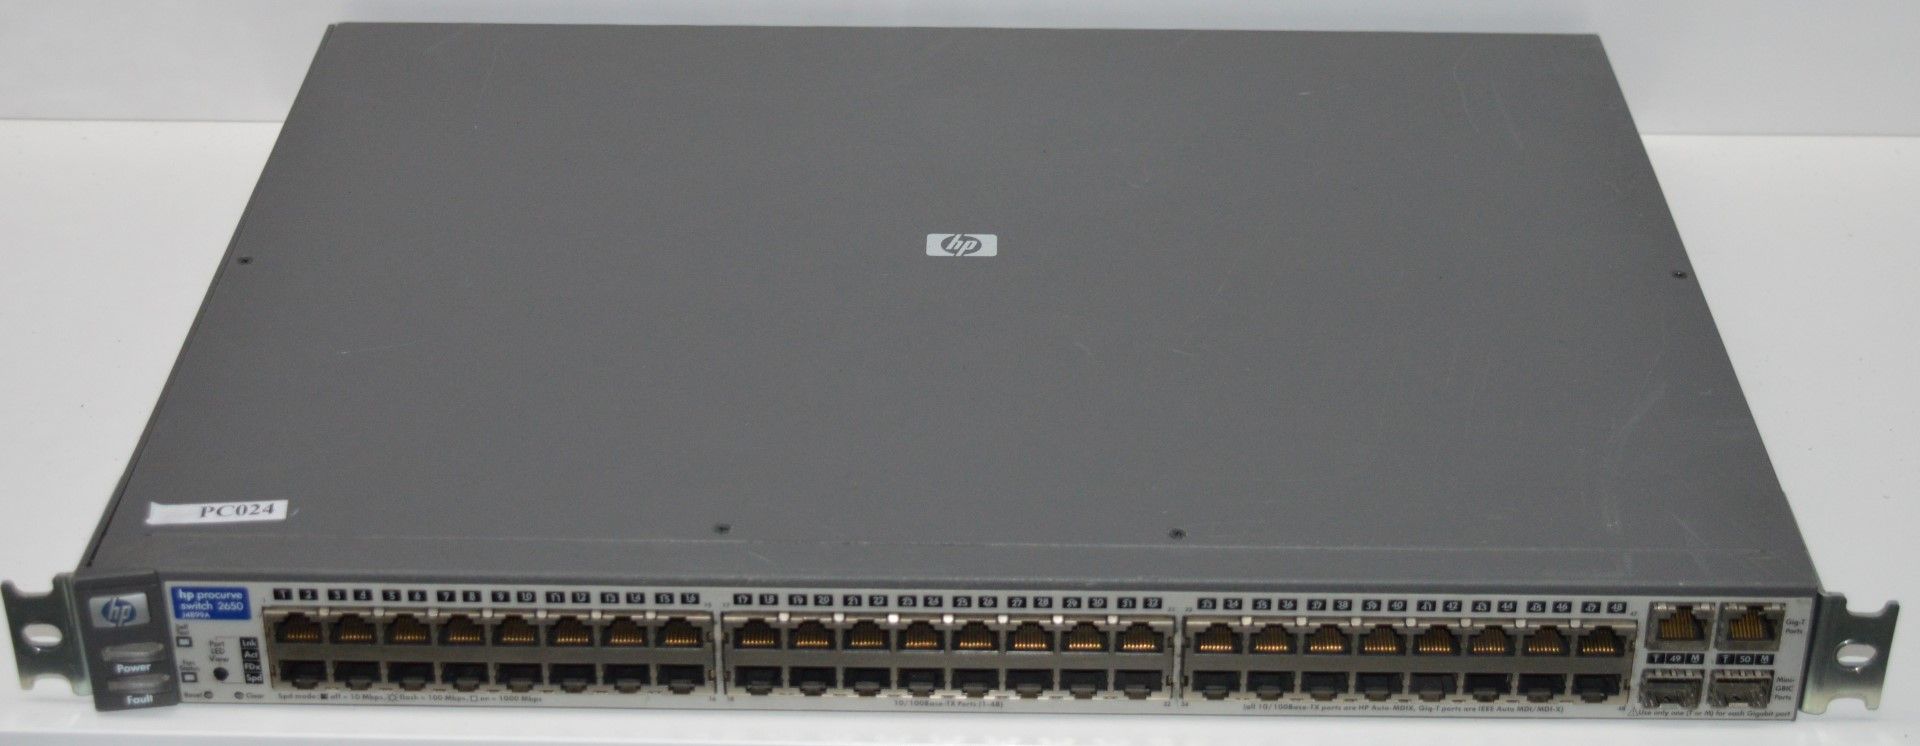 1 x Hewlett Packard Procurve 2650 24-port Fast Ethernet Network Switch - CL159 - Ref PC024 -